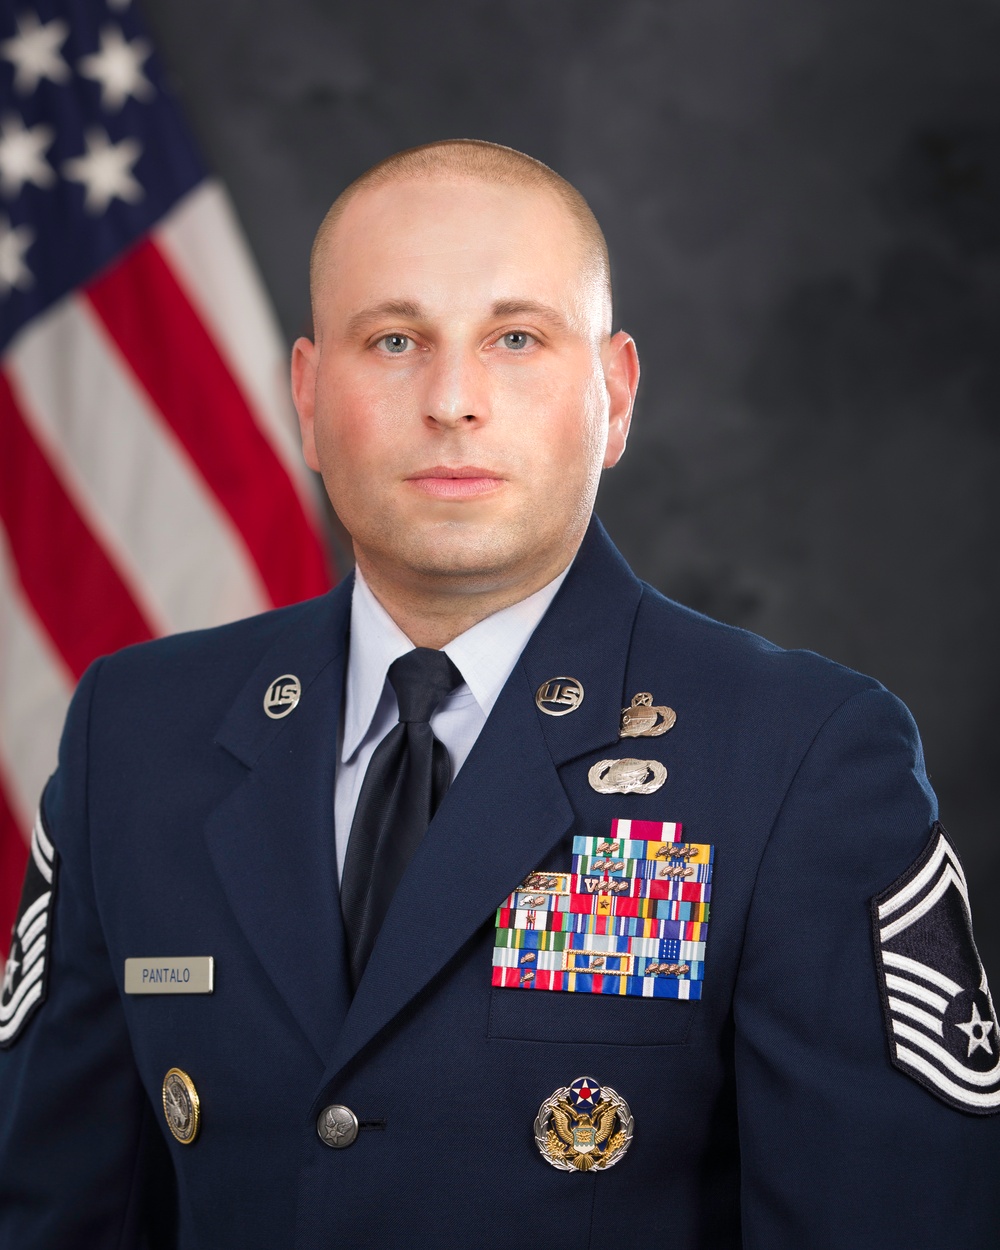 Official Portrait of Senior Master Sgt. Kevin J. Pantalo, US Air Force